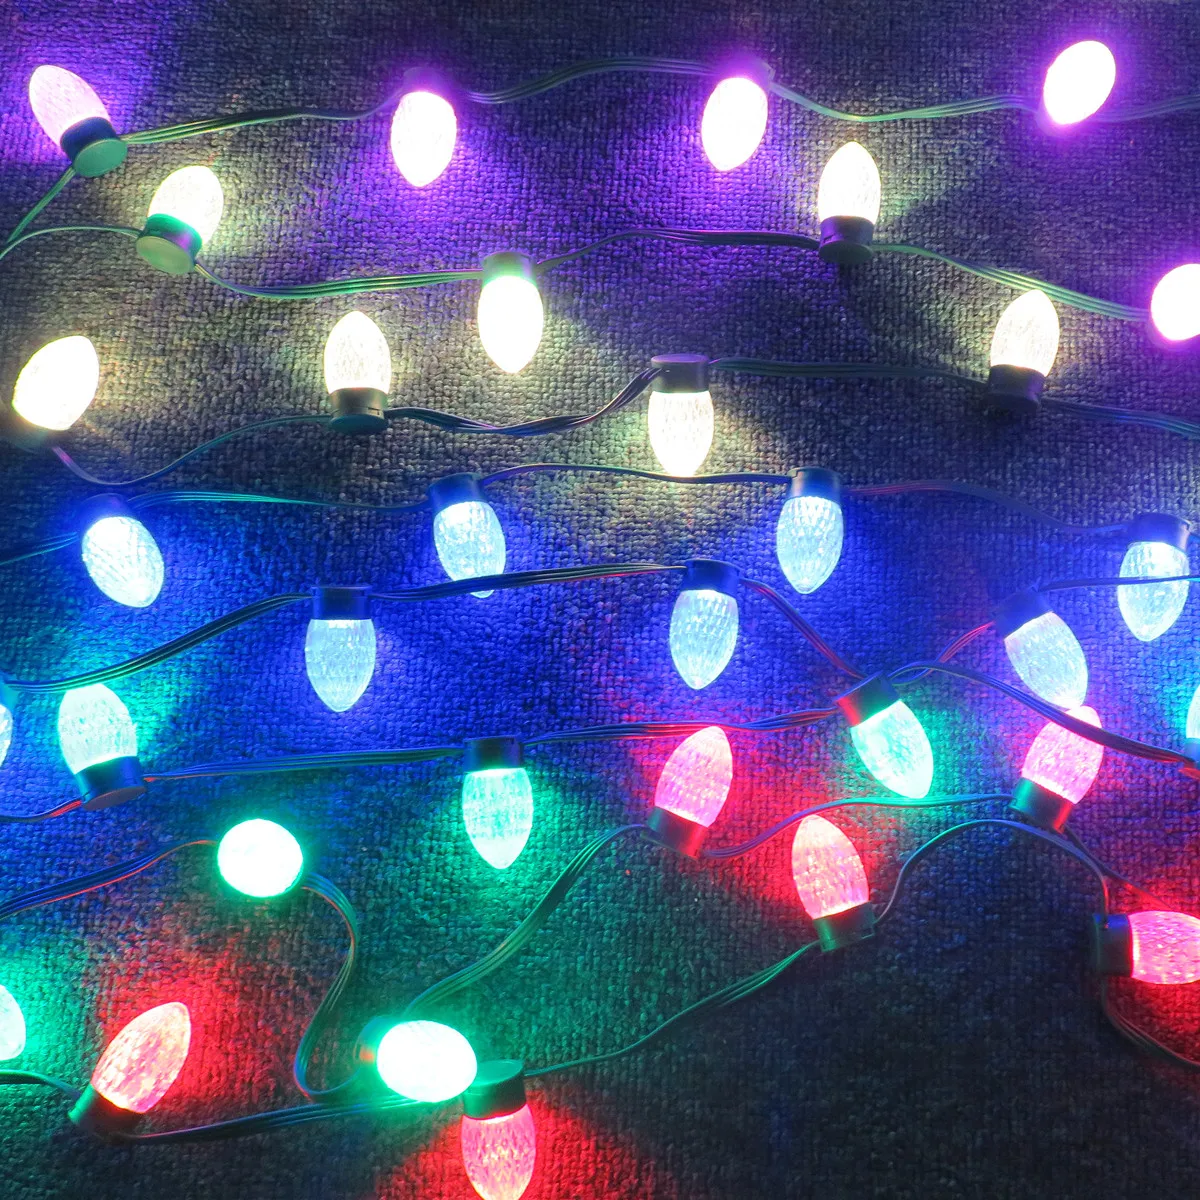 Pixabulb C9/S24 With Flat Base DC12V WS2811 LED Pixel String Lights Addressable Christmas Tree Lighting